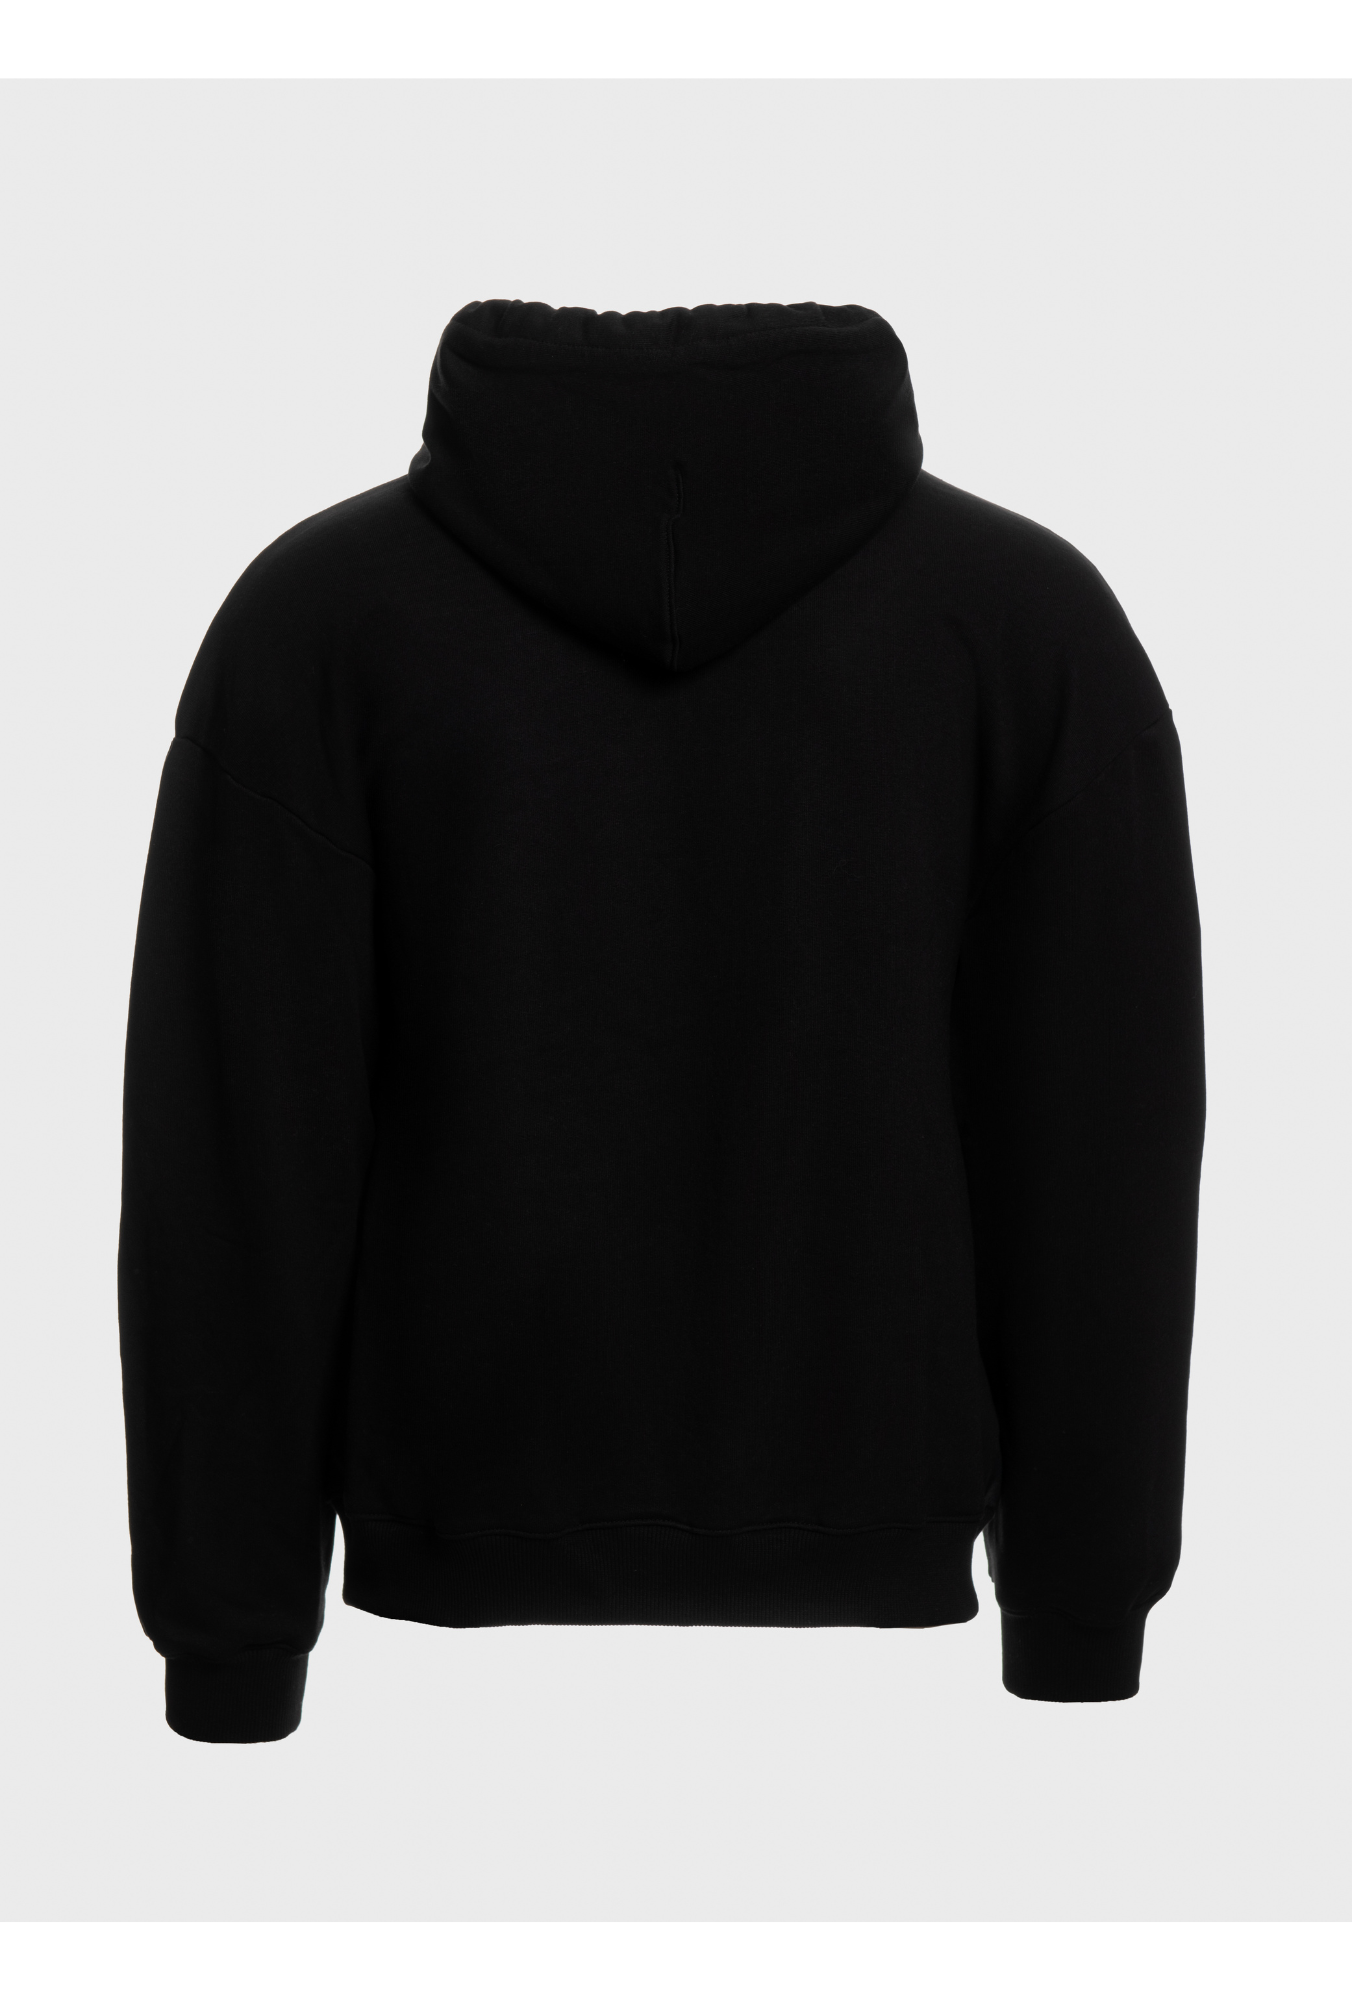 Full zip hoodies nylon + front pocket